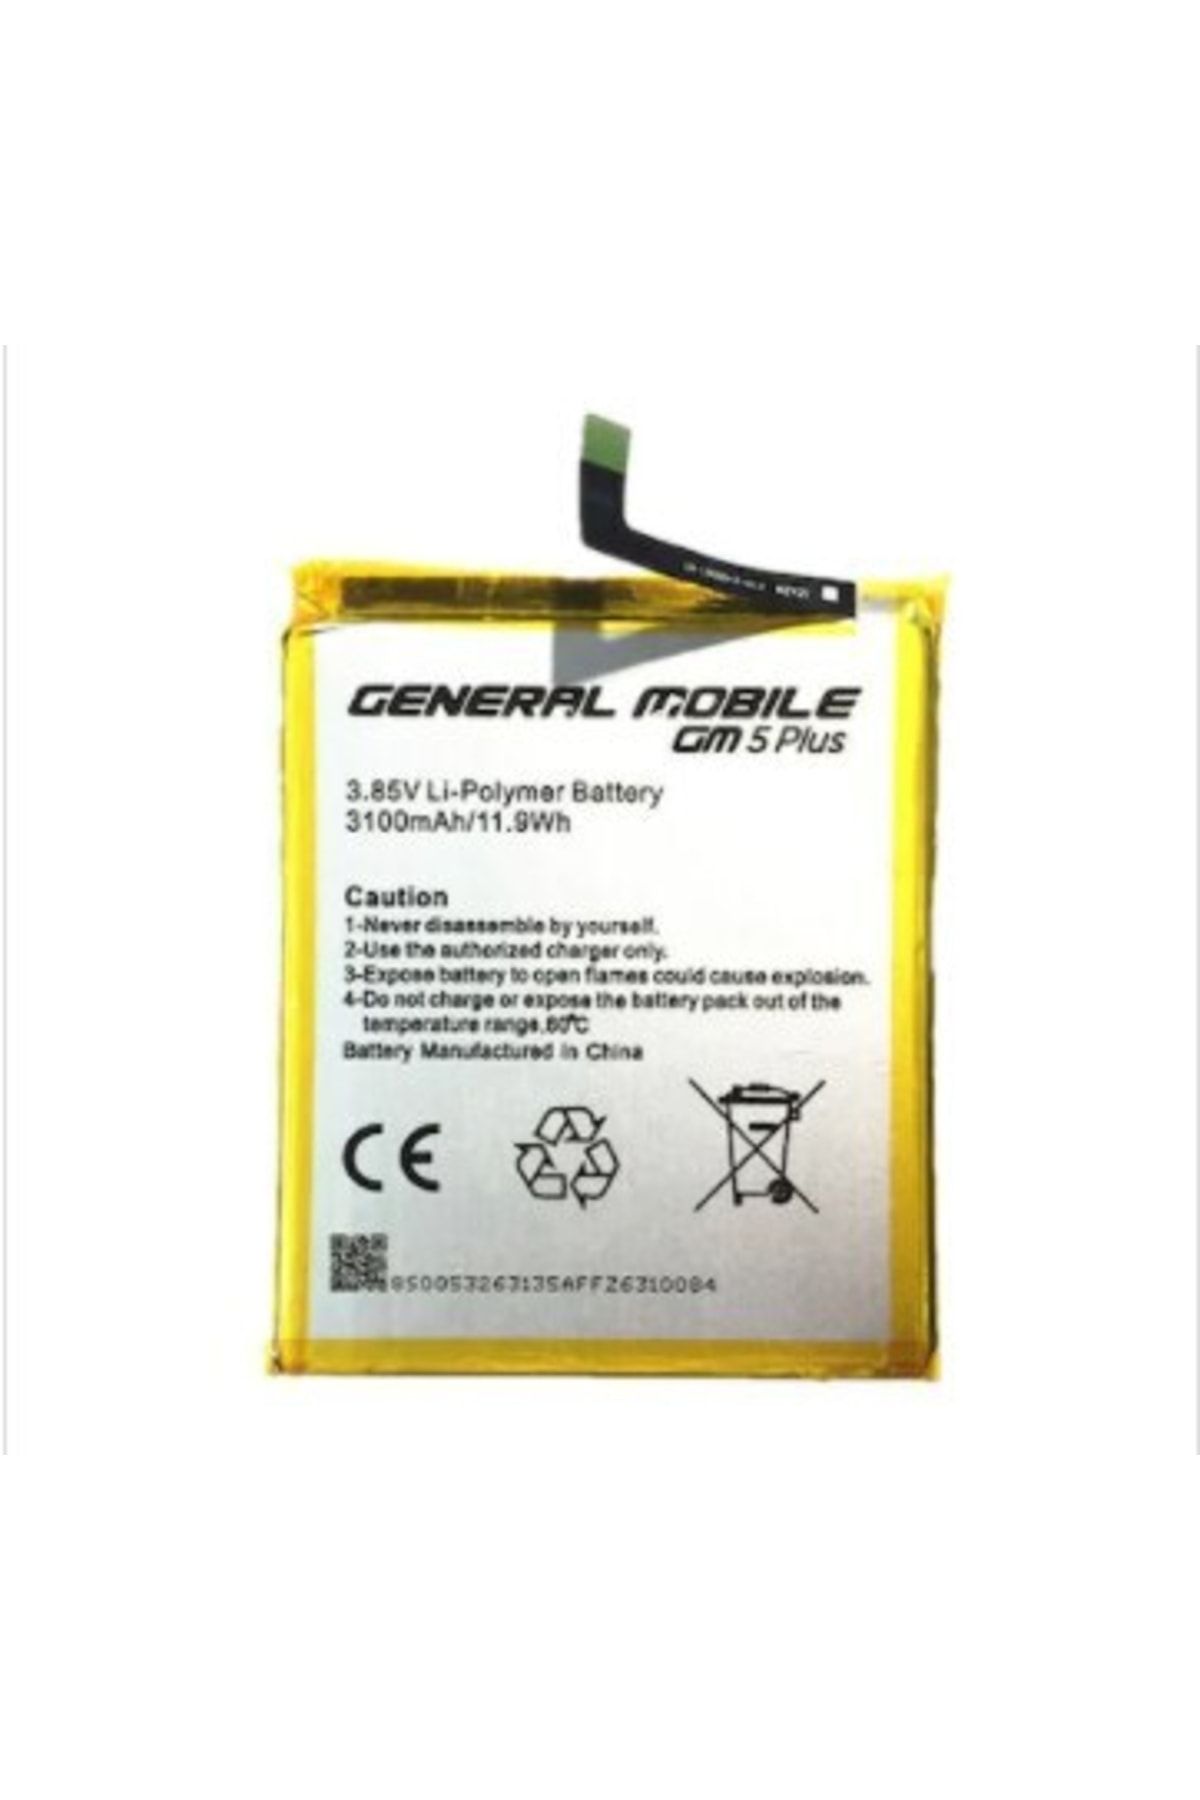 General Mobile Discovery Gm 5 Plus Batarya Pilsind